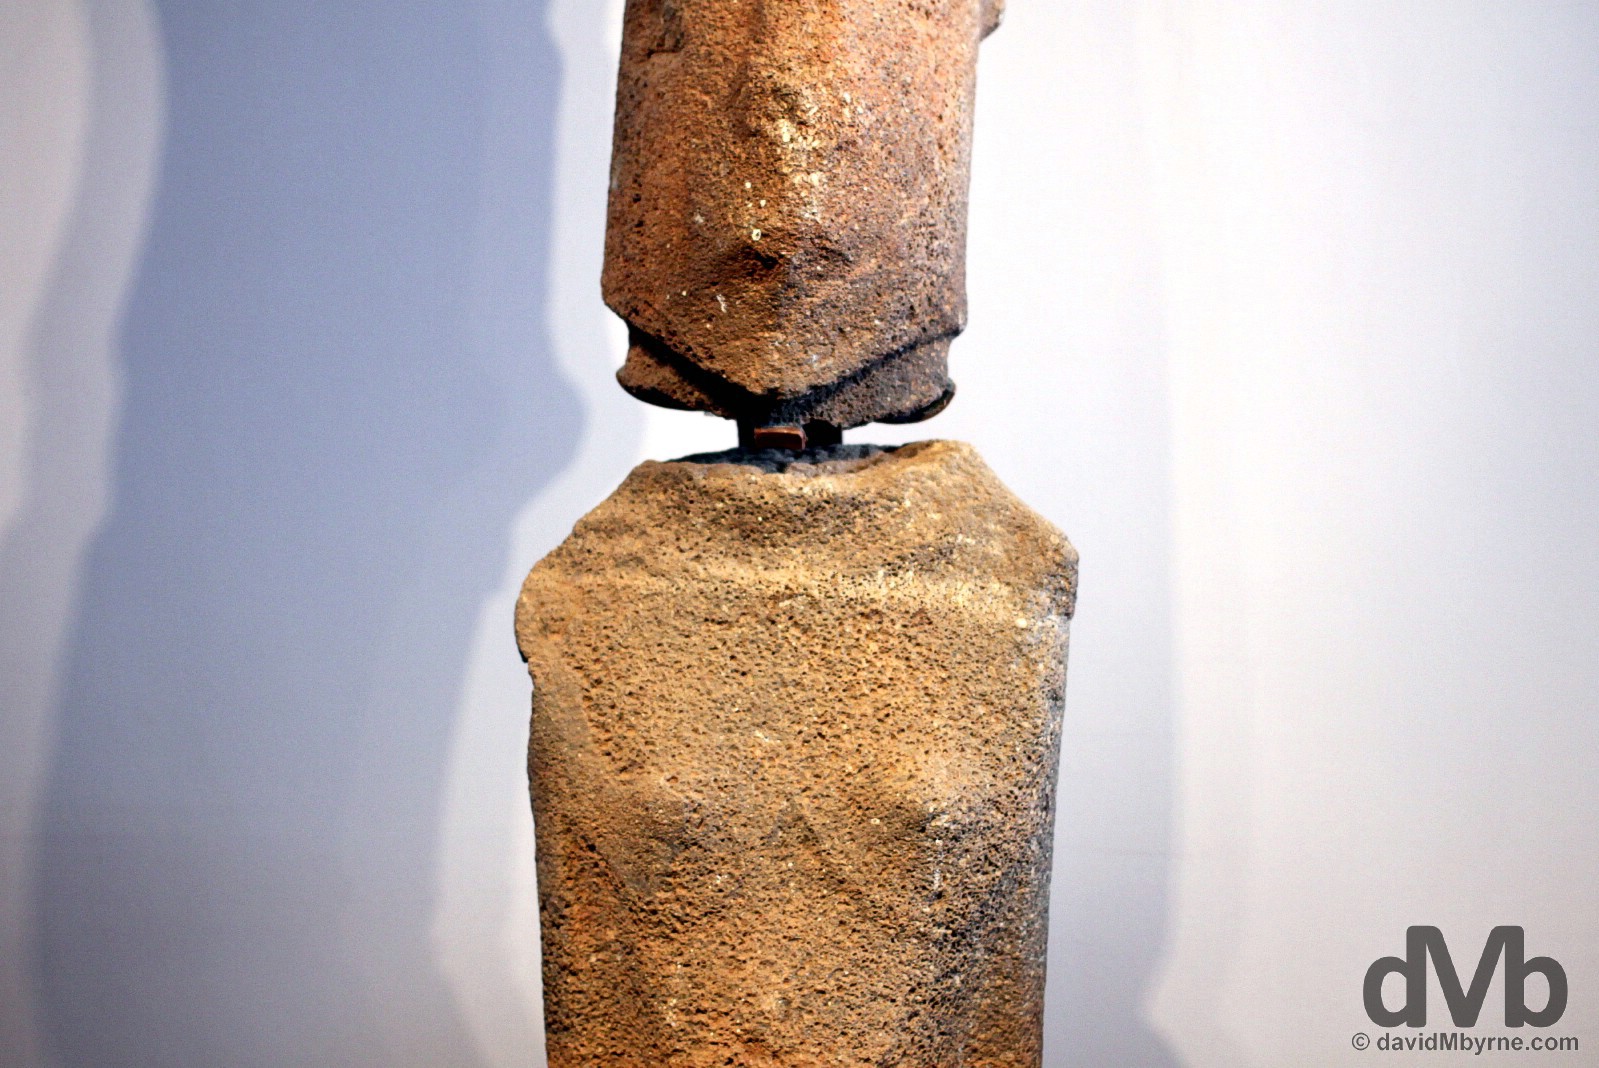 A female moai on display in the Museo Antropologico P. Sebastian Englert, Hanga Roa, Easter Island, Chile. September 30, 2015.